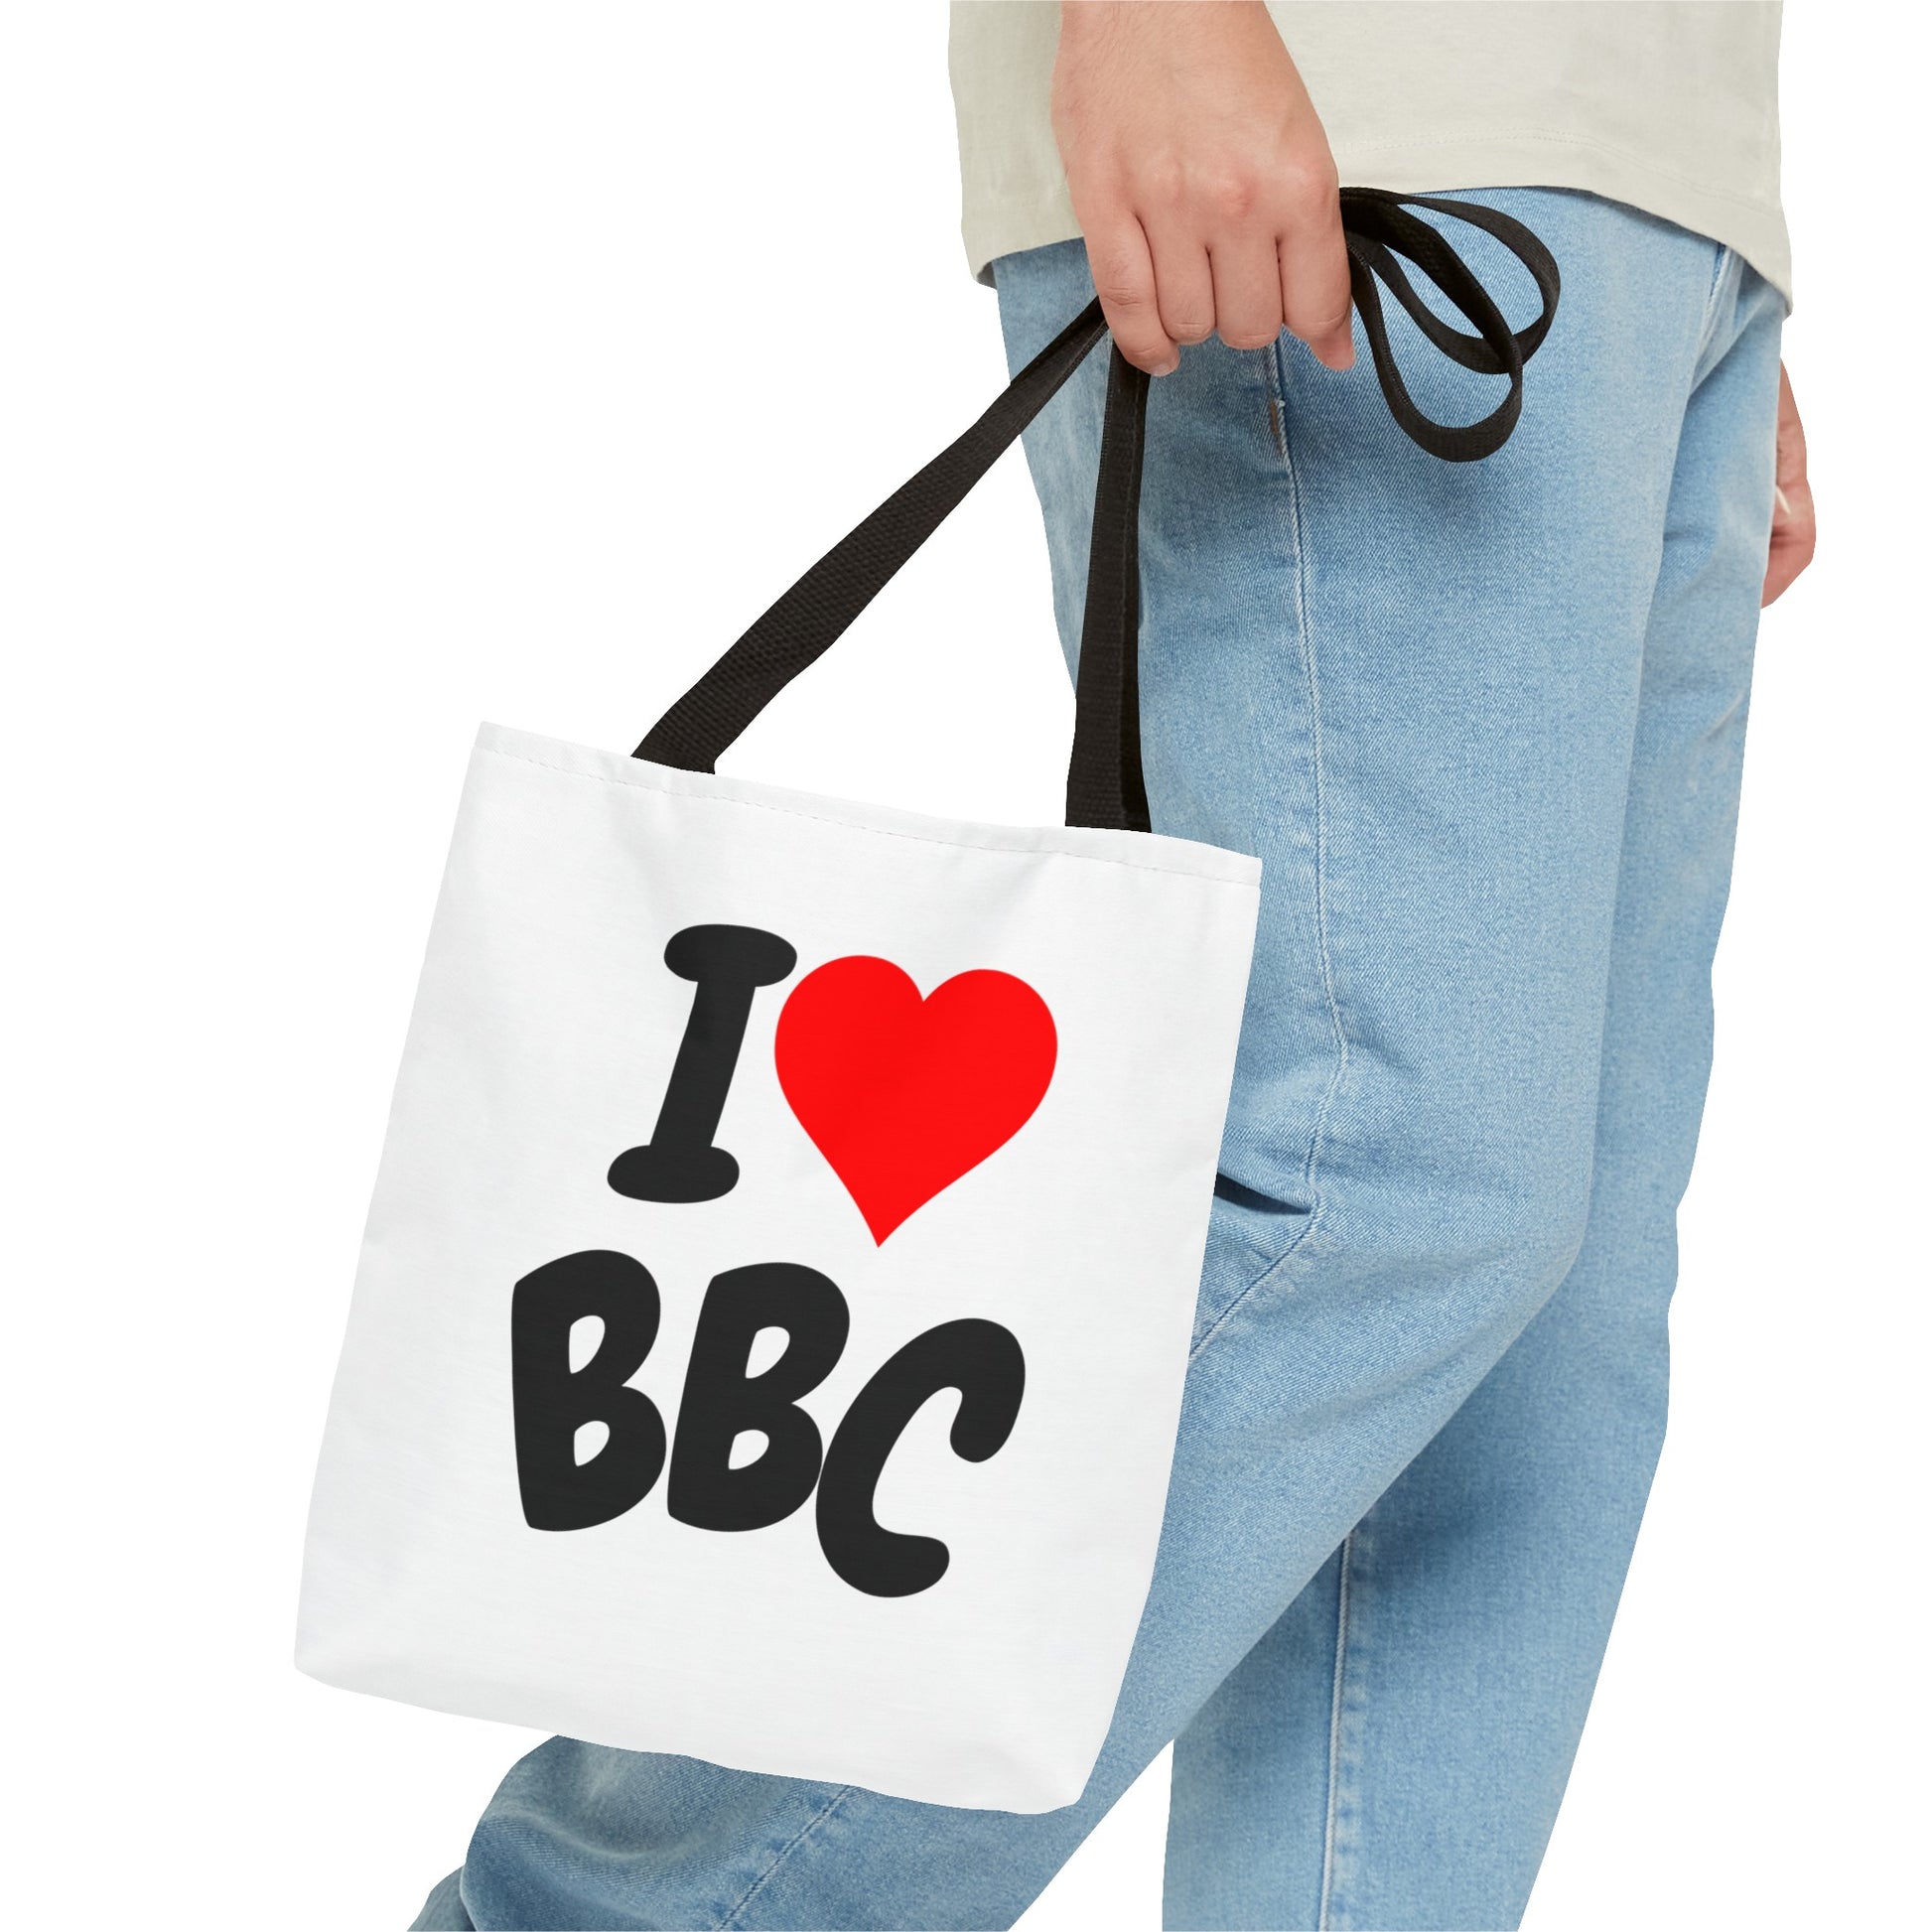 Juucie | "I Love BBC" Tote Bag - Juucie